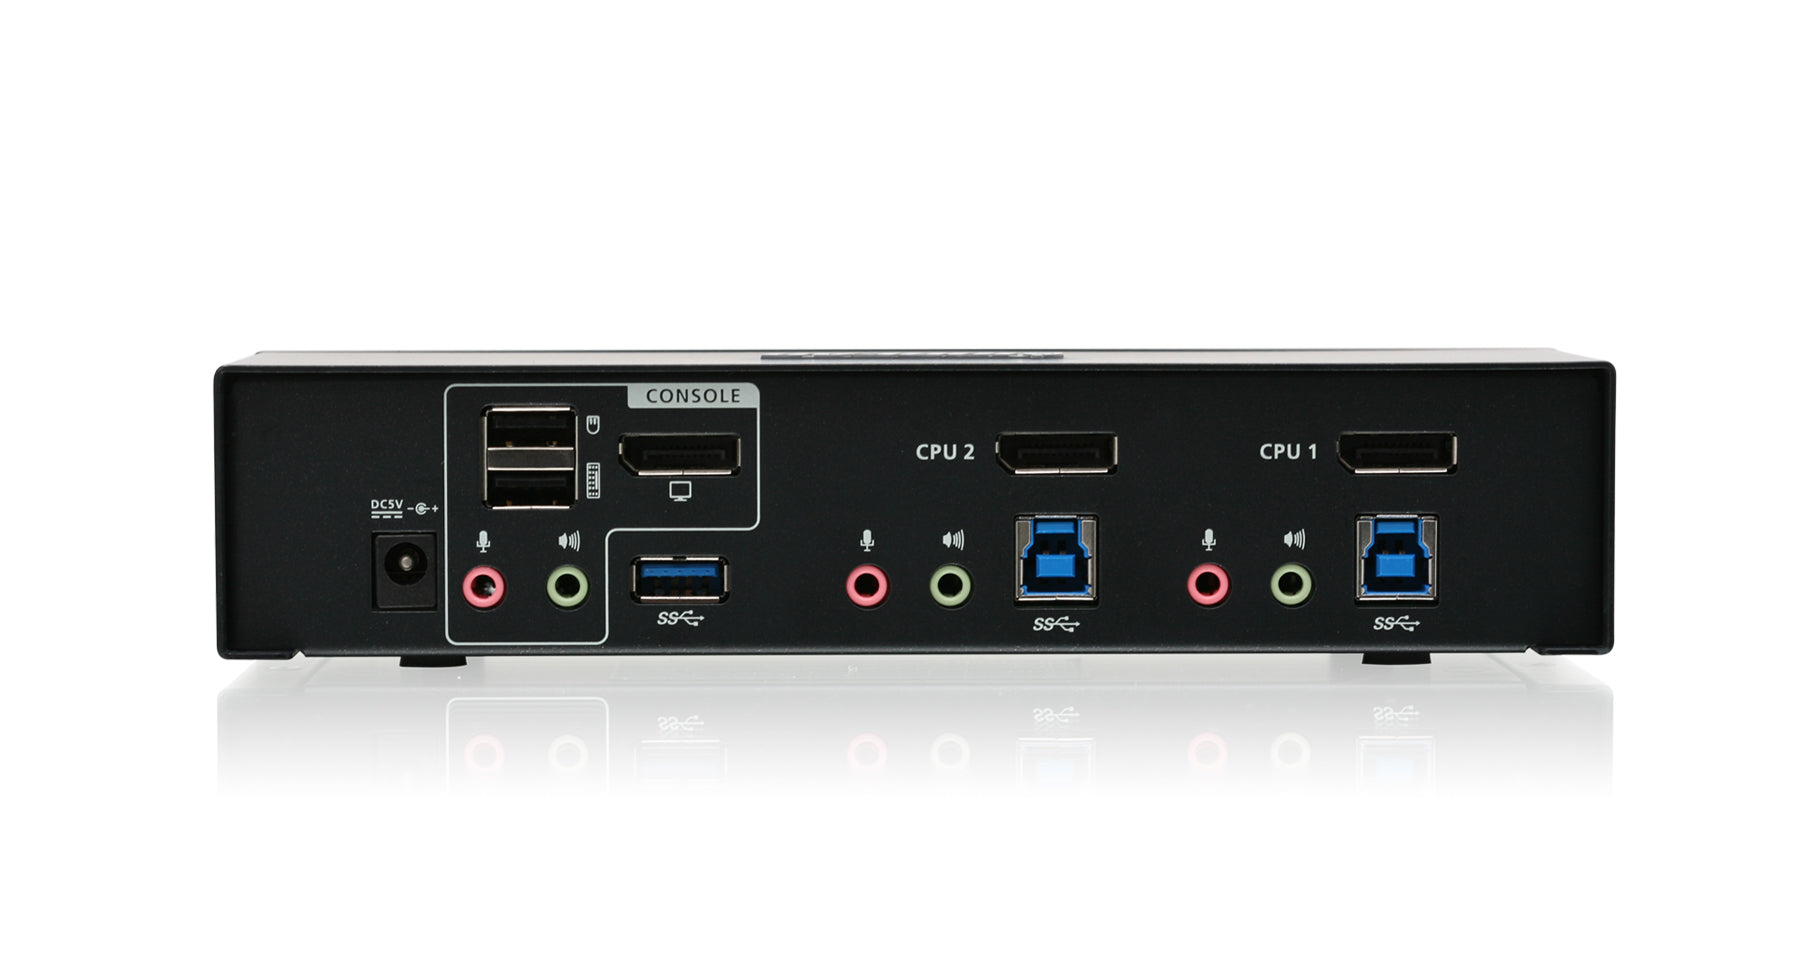 2-Port DisplayPort 1.2 KVMP Switch with USB 3.1 Gen1 Hub and Audio